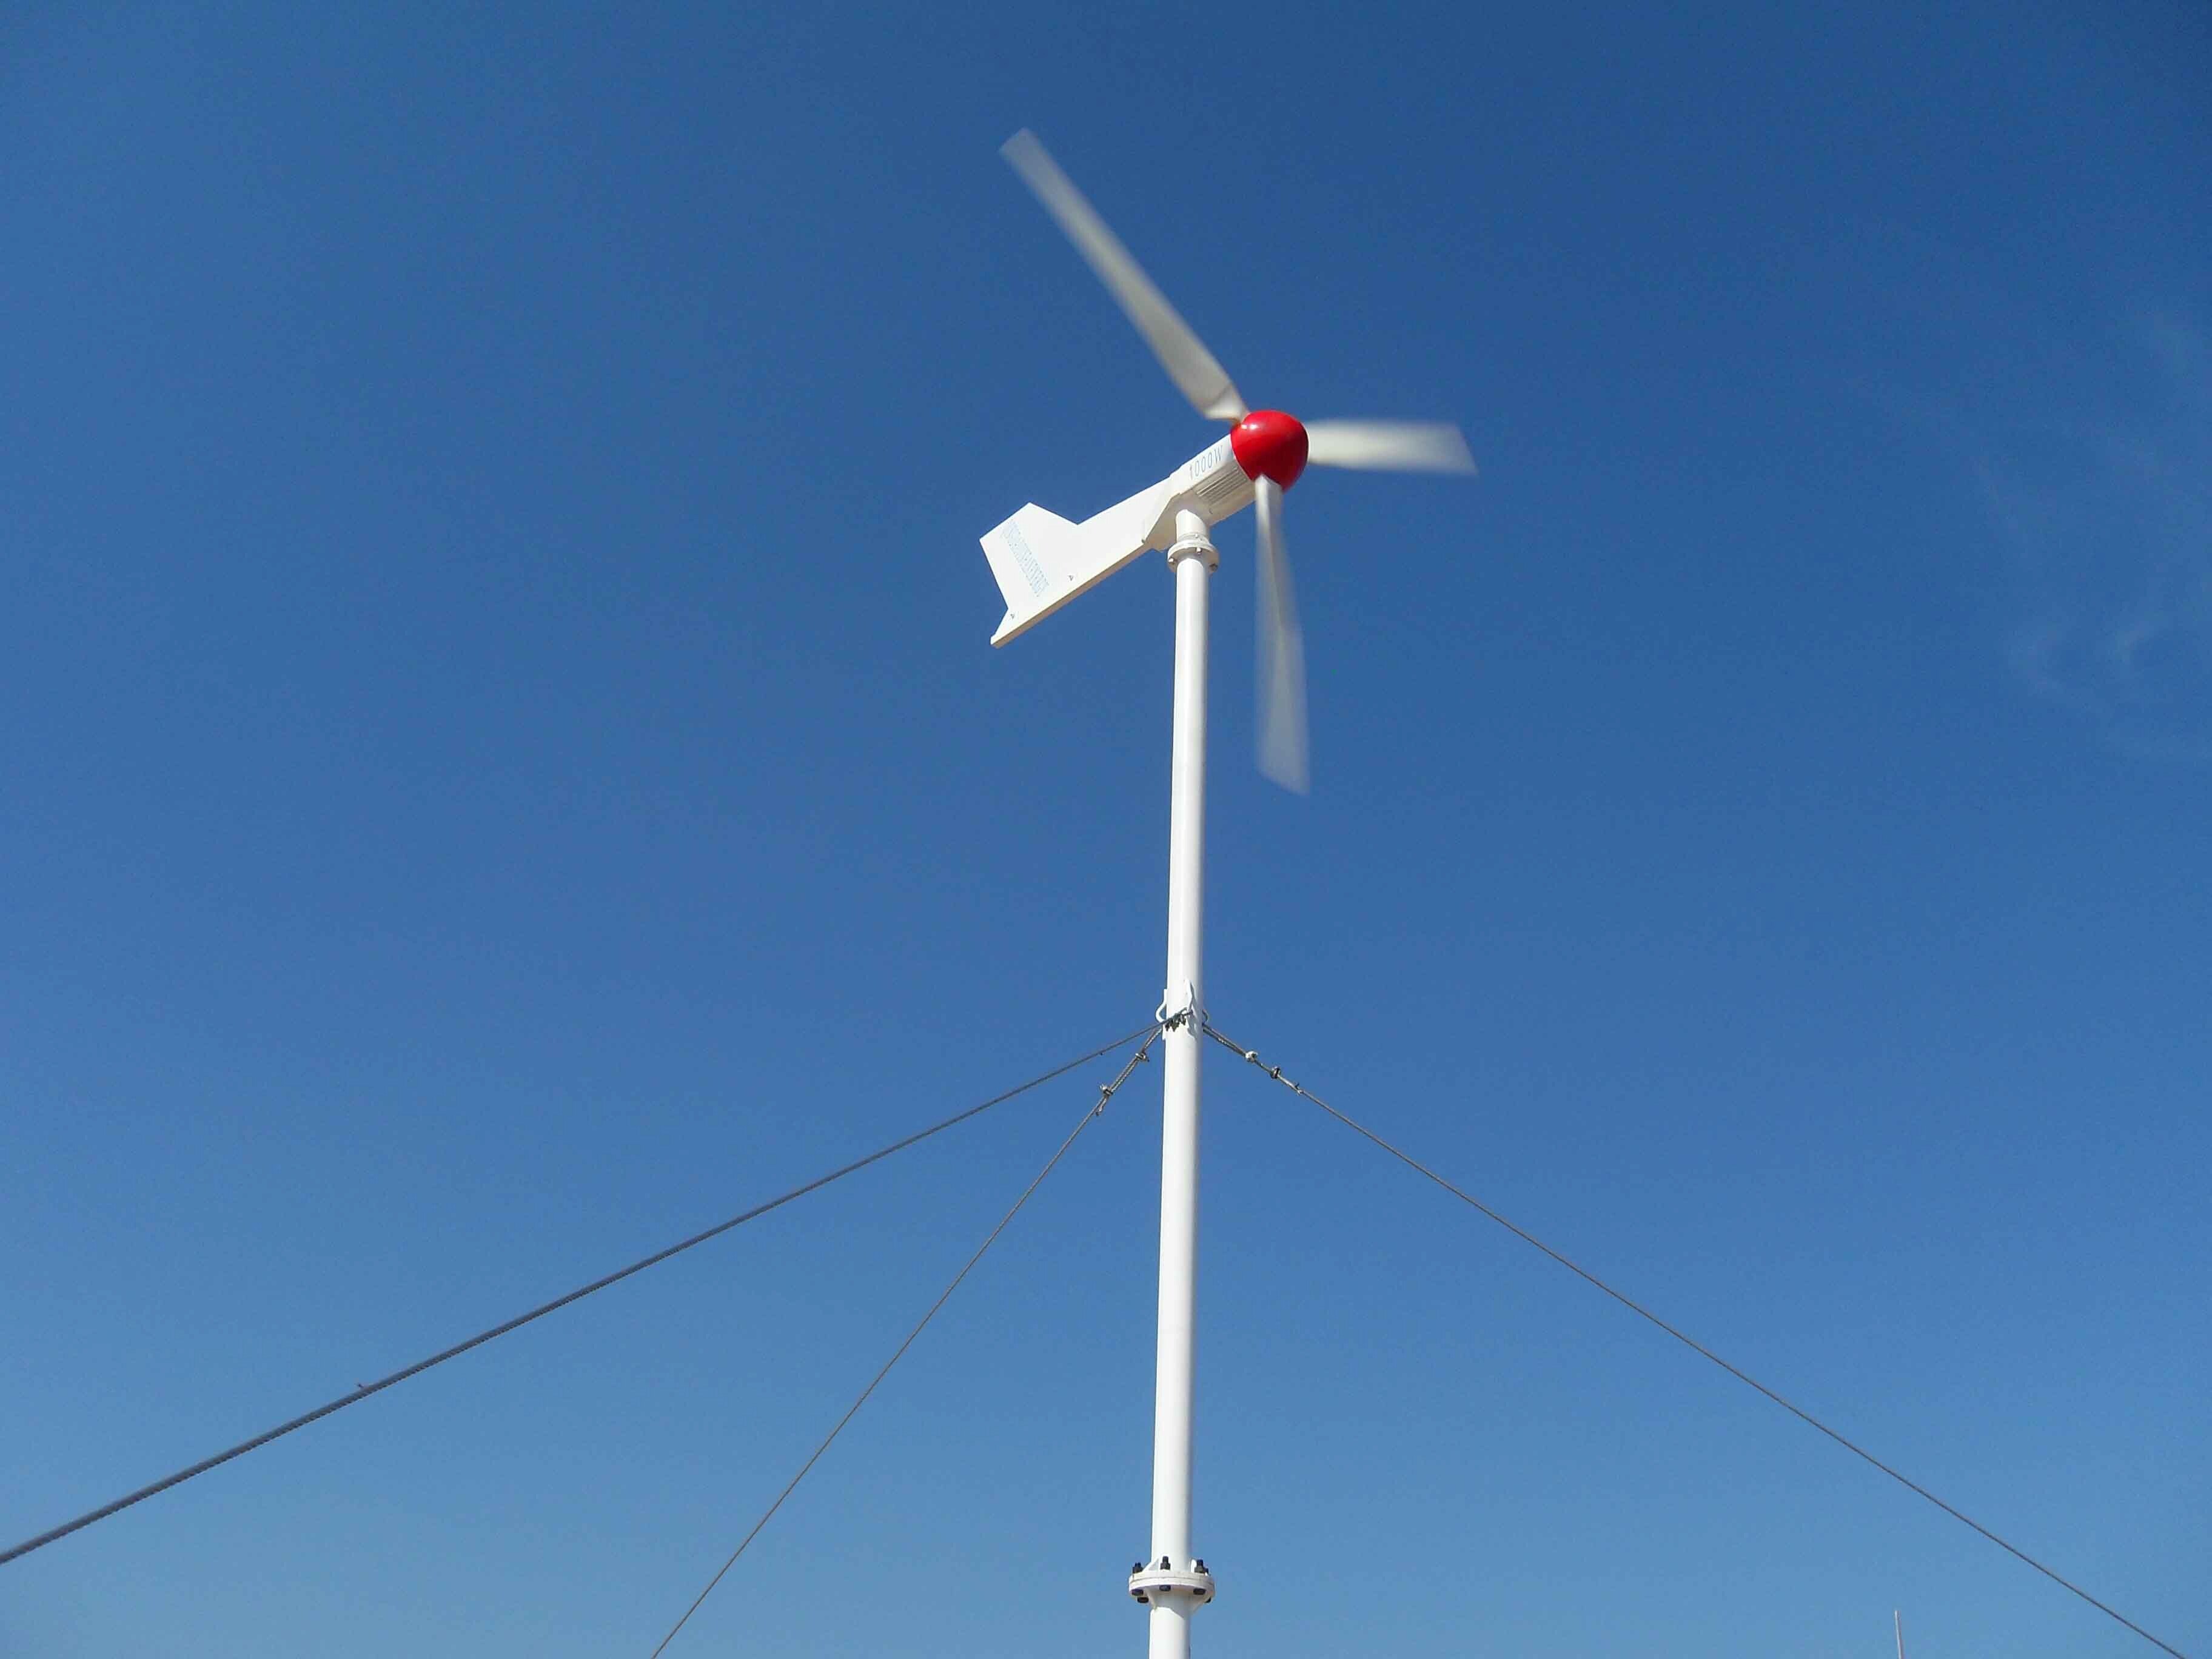 1kw Horizonal Axis Wind Turbine System